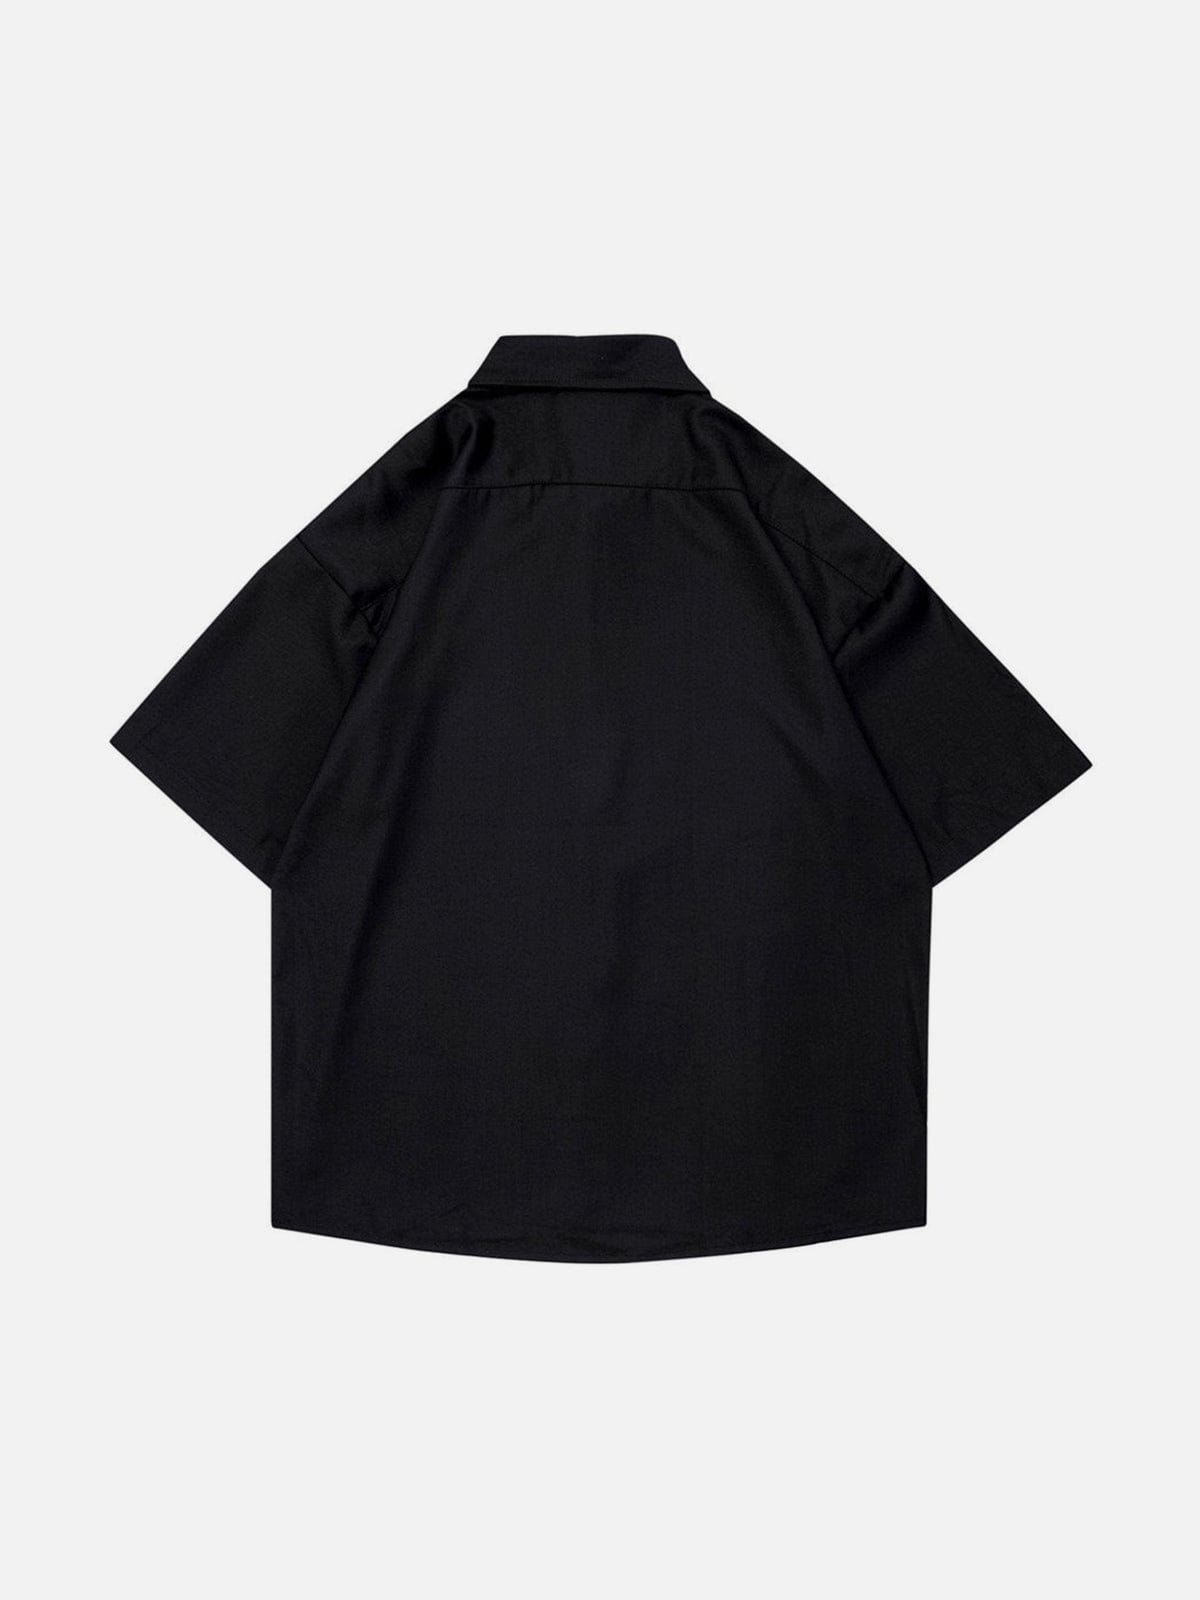 Dark Solid Color Shirt Streetwear Brand Techwear Combat Tactical YUGEN THEORY